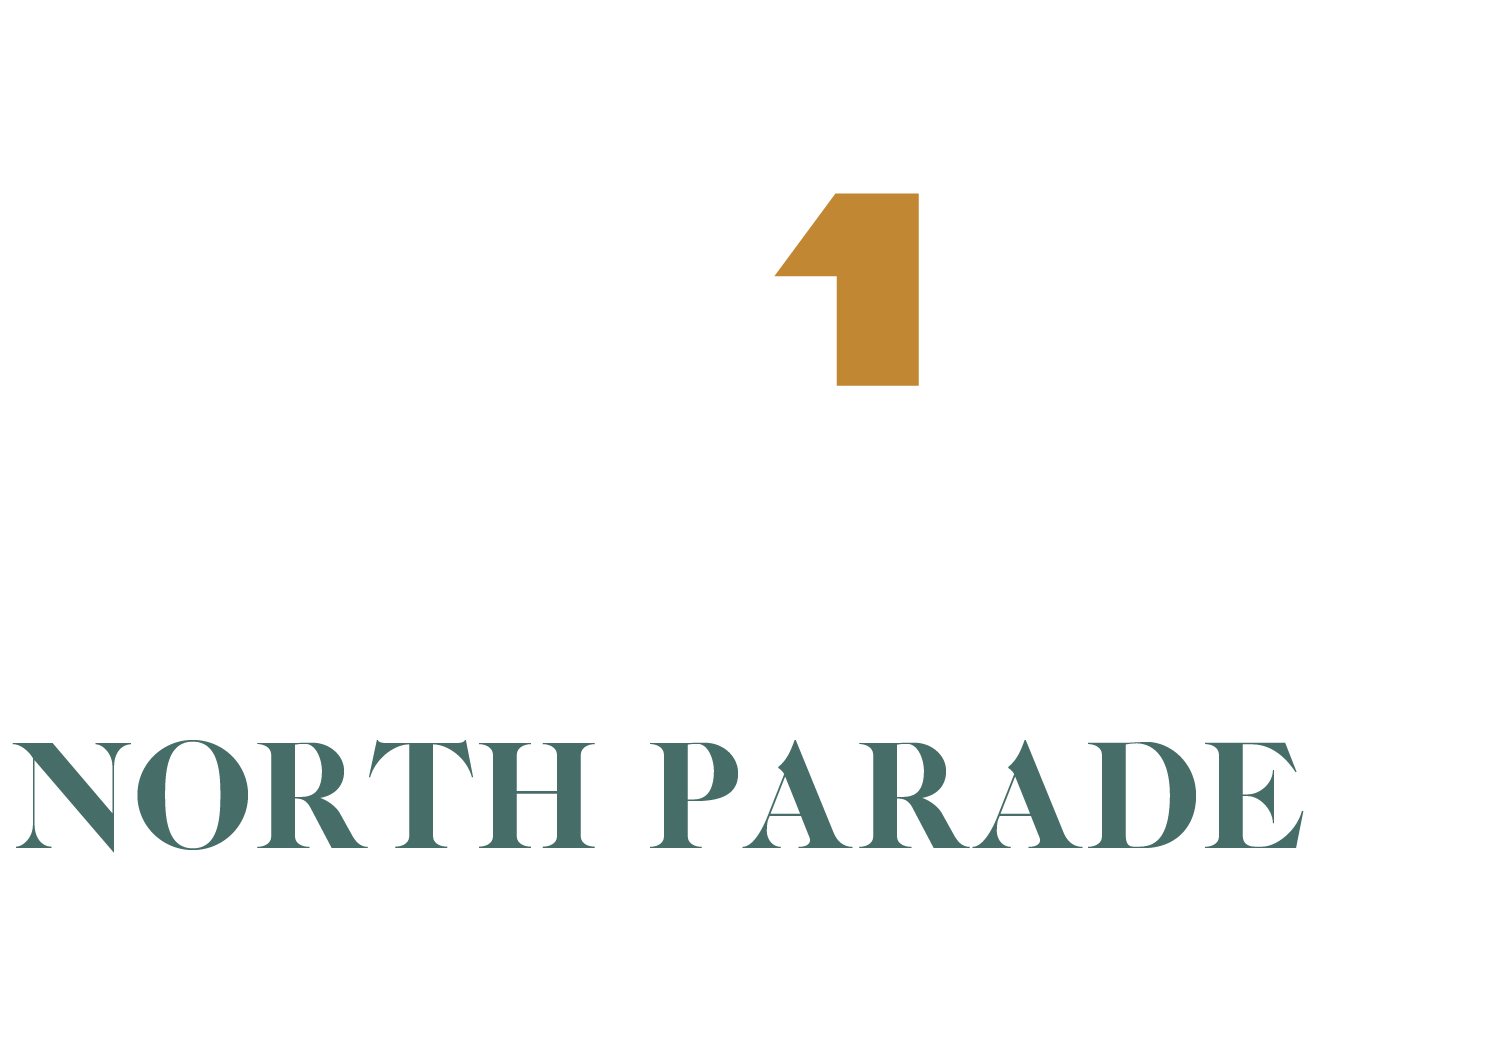 One North Parade